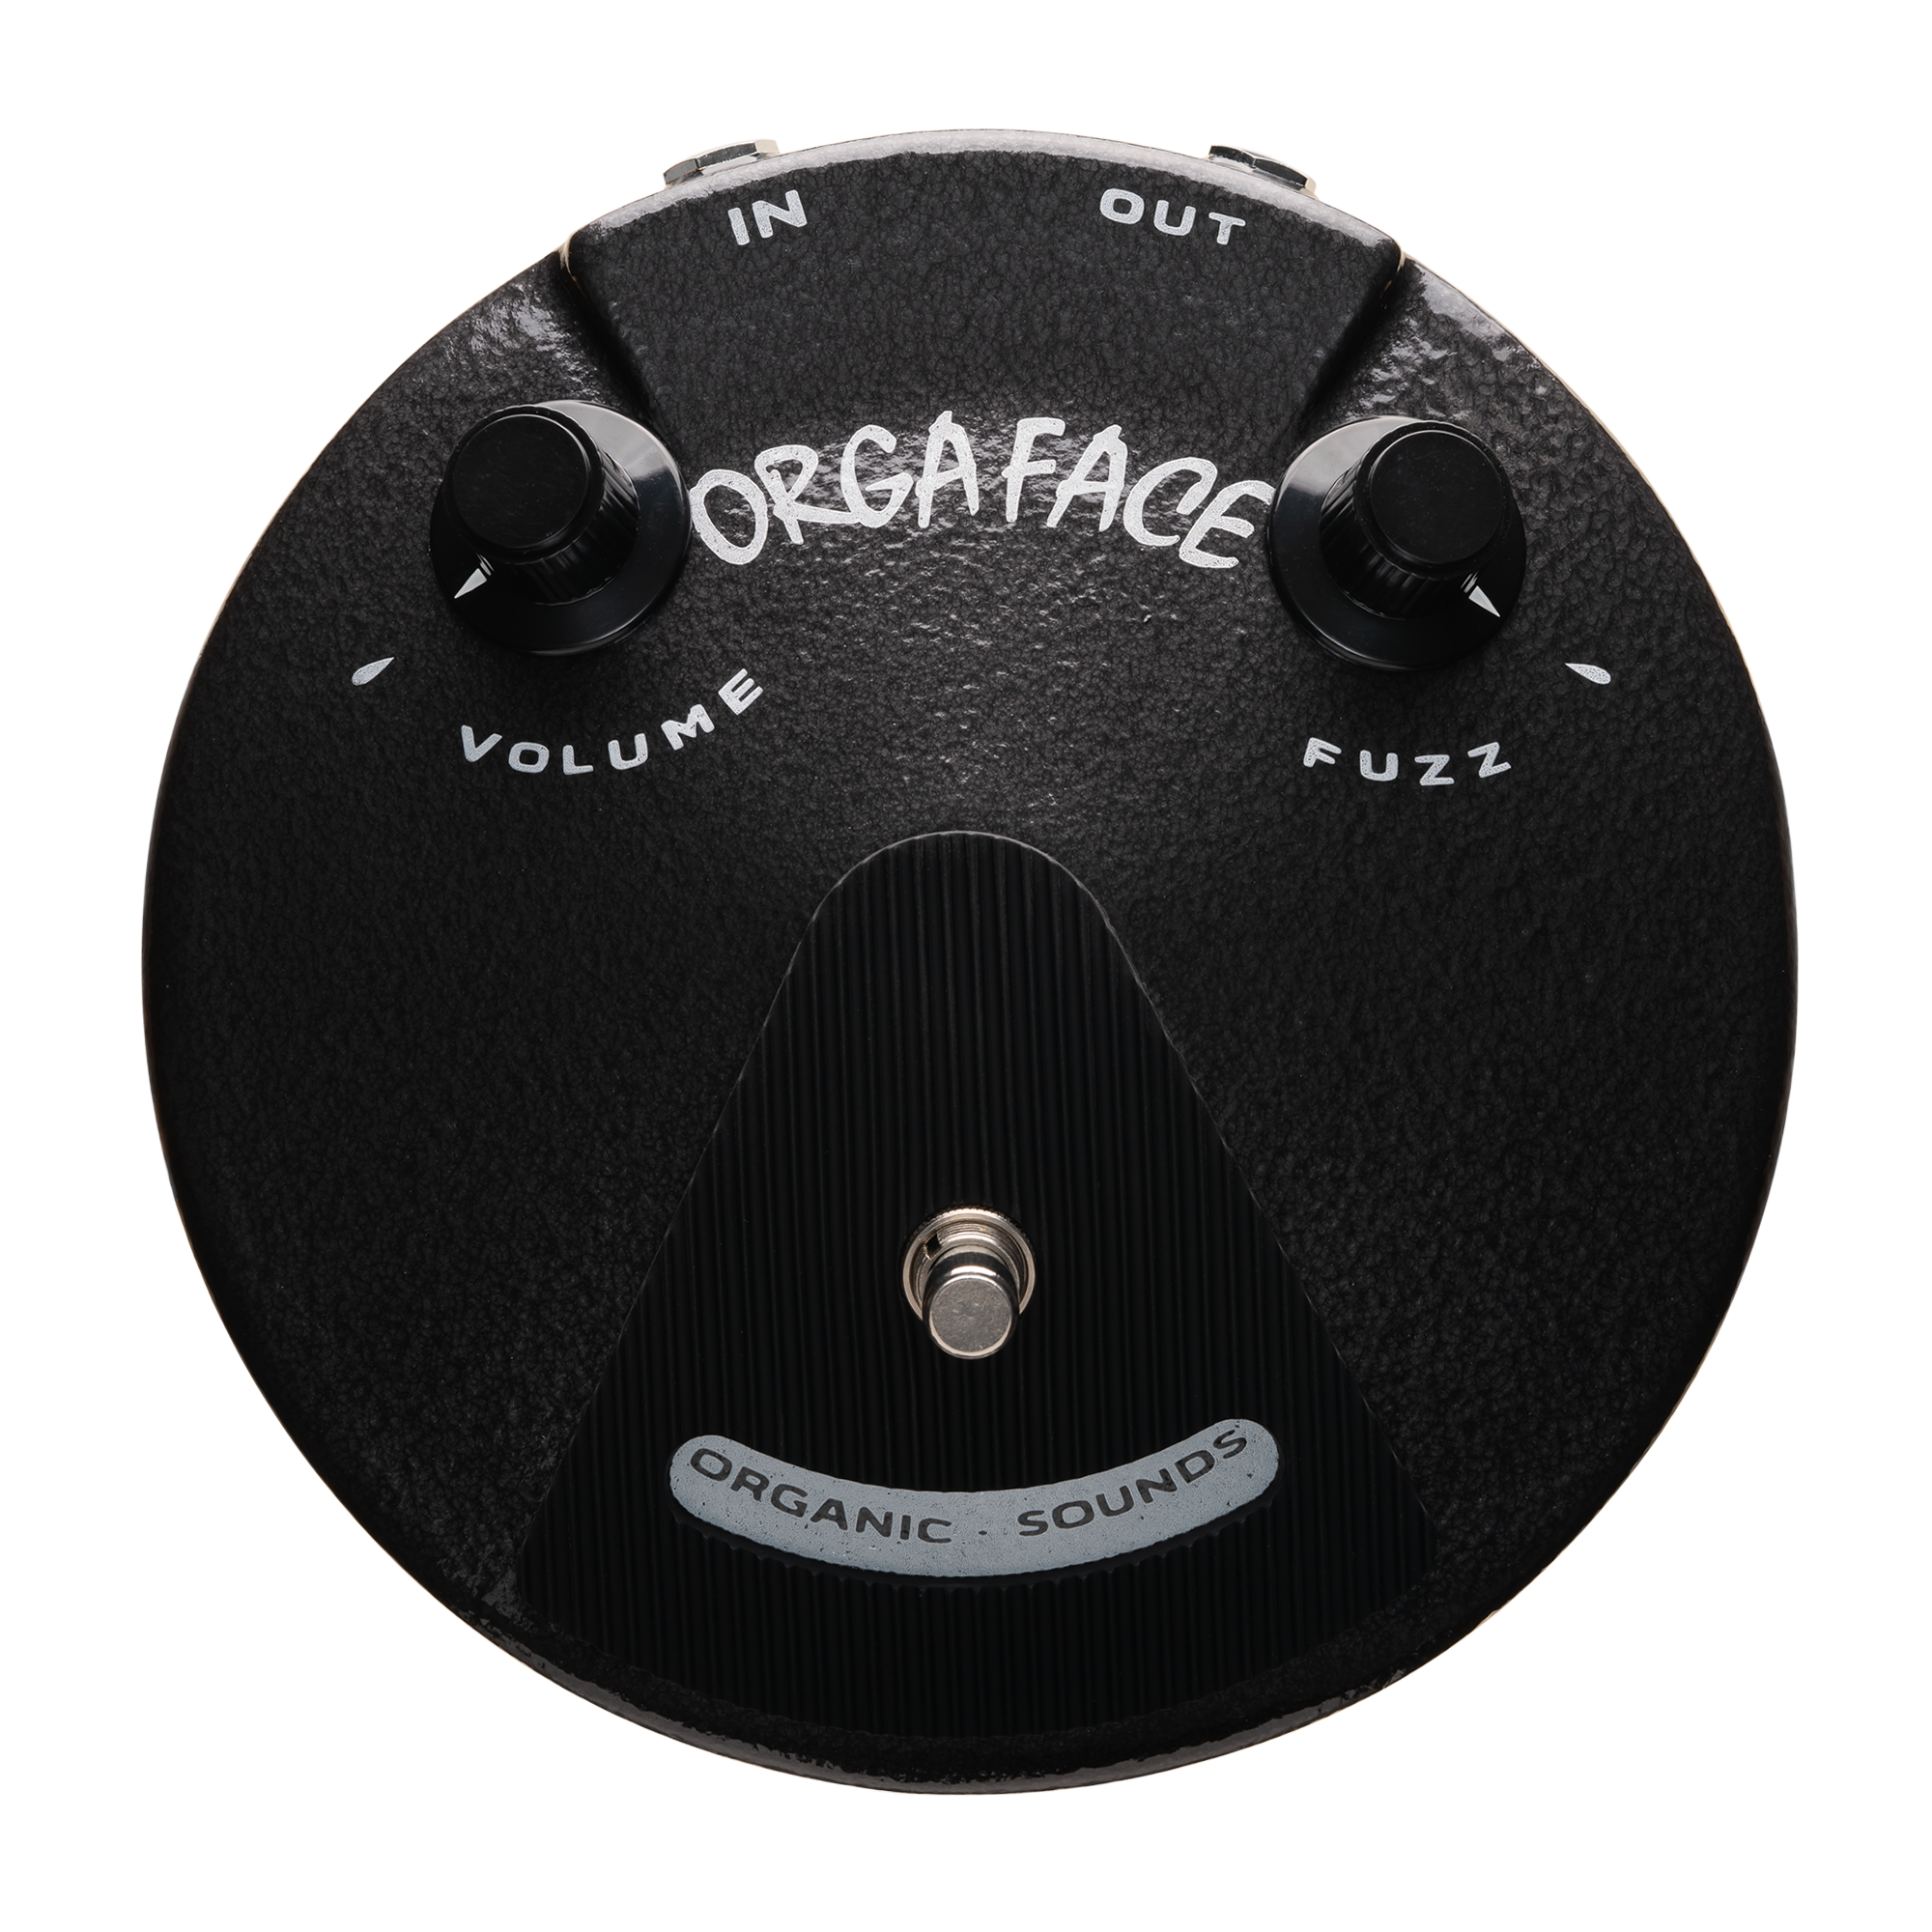 ORGA FACE 66 / Black | Organic Sounds